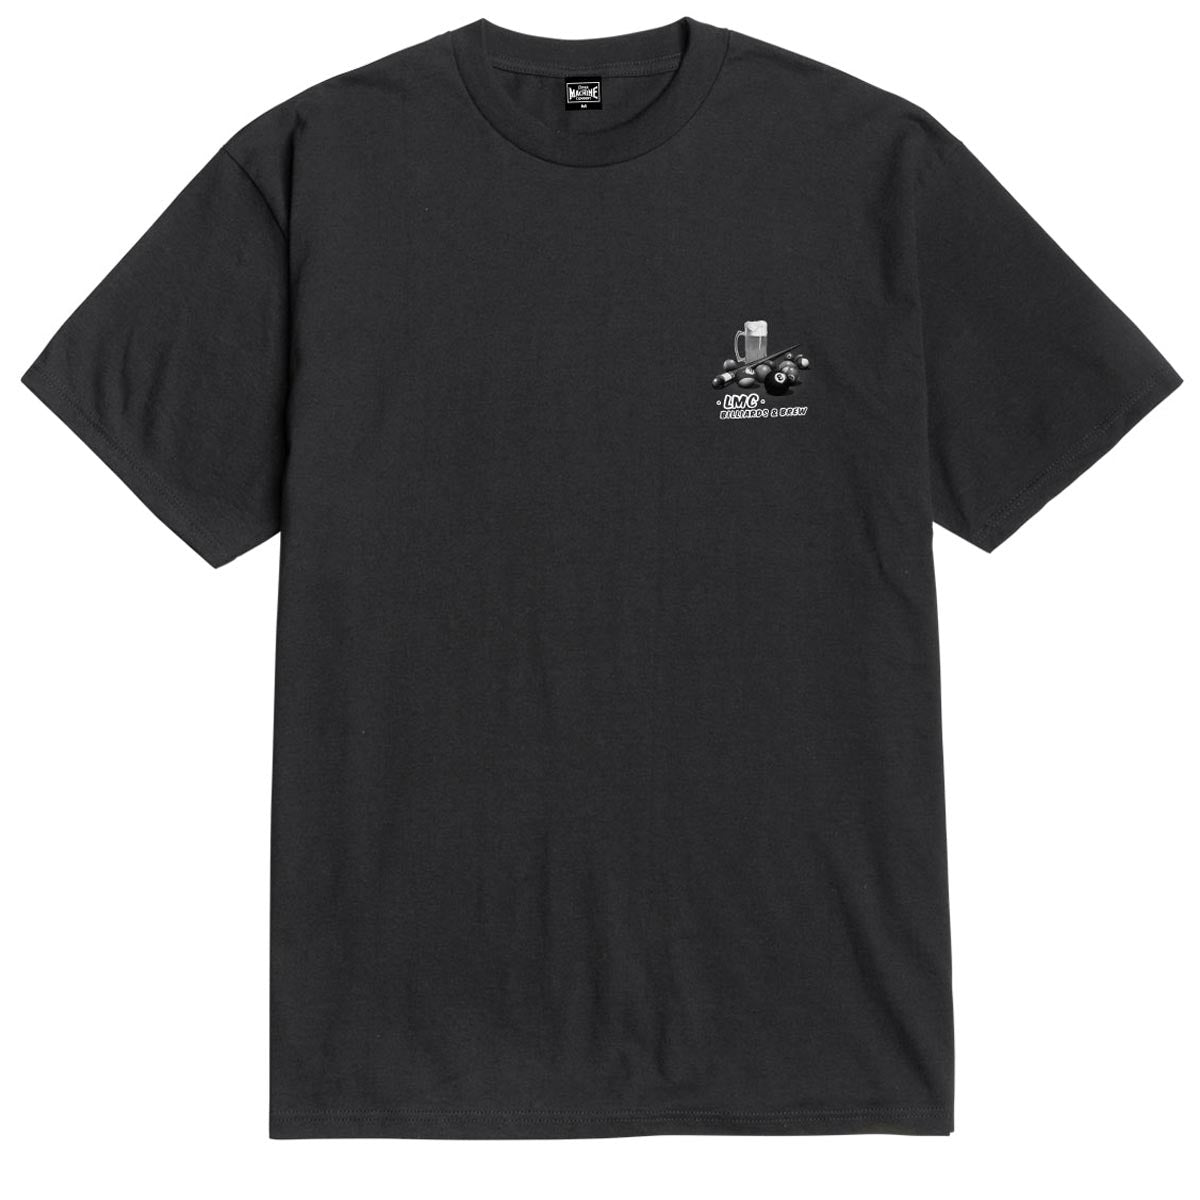 Loser Machine Billiards T-Shirt - Black image 2